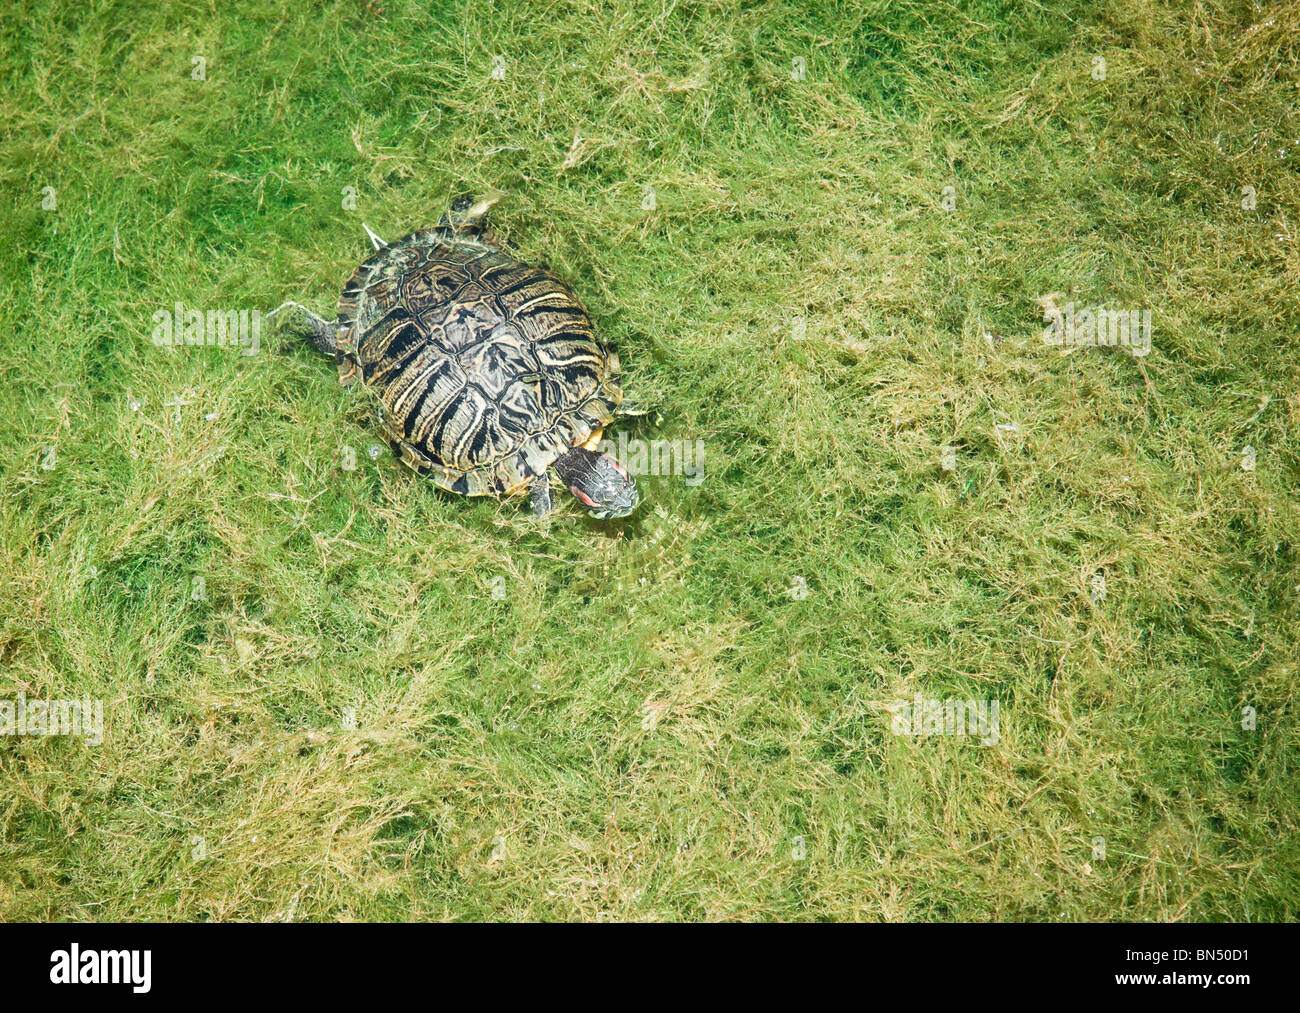 A turtle swimming through thick foliage Stock Photo